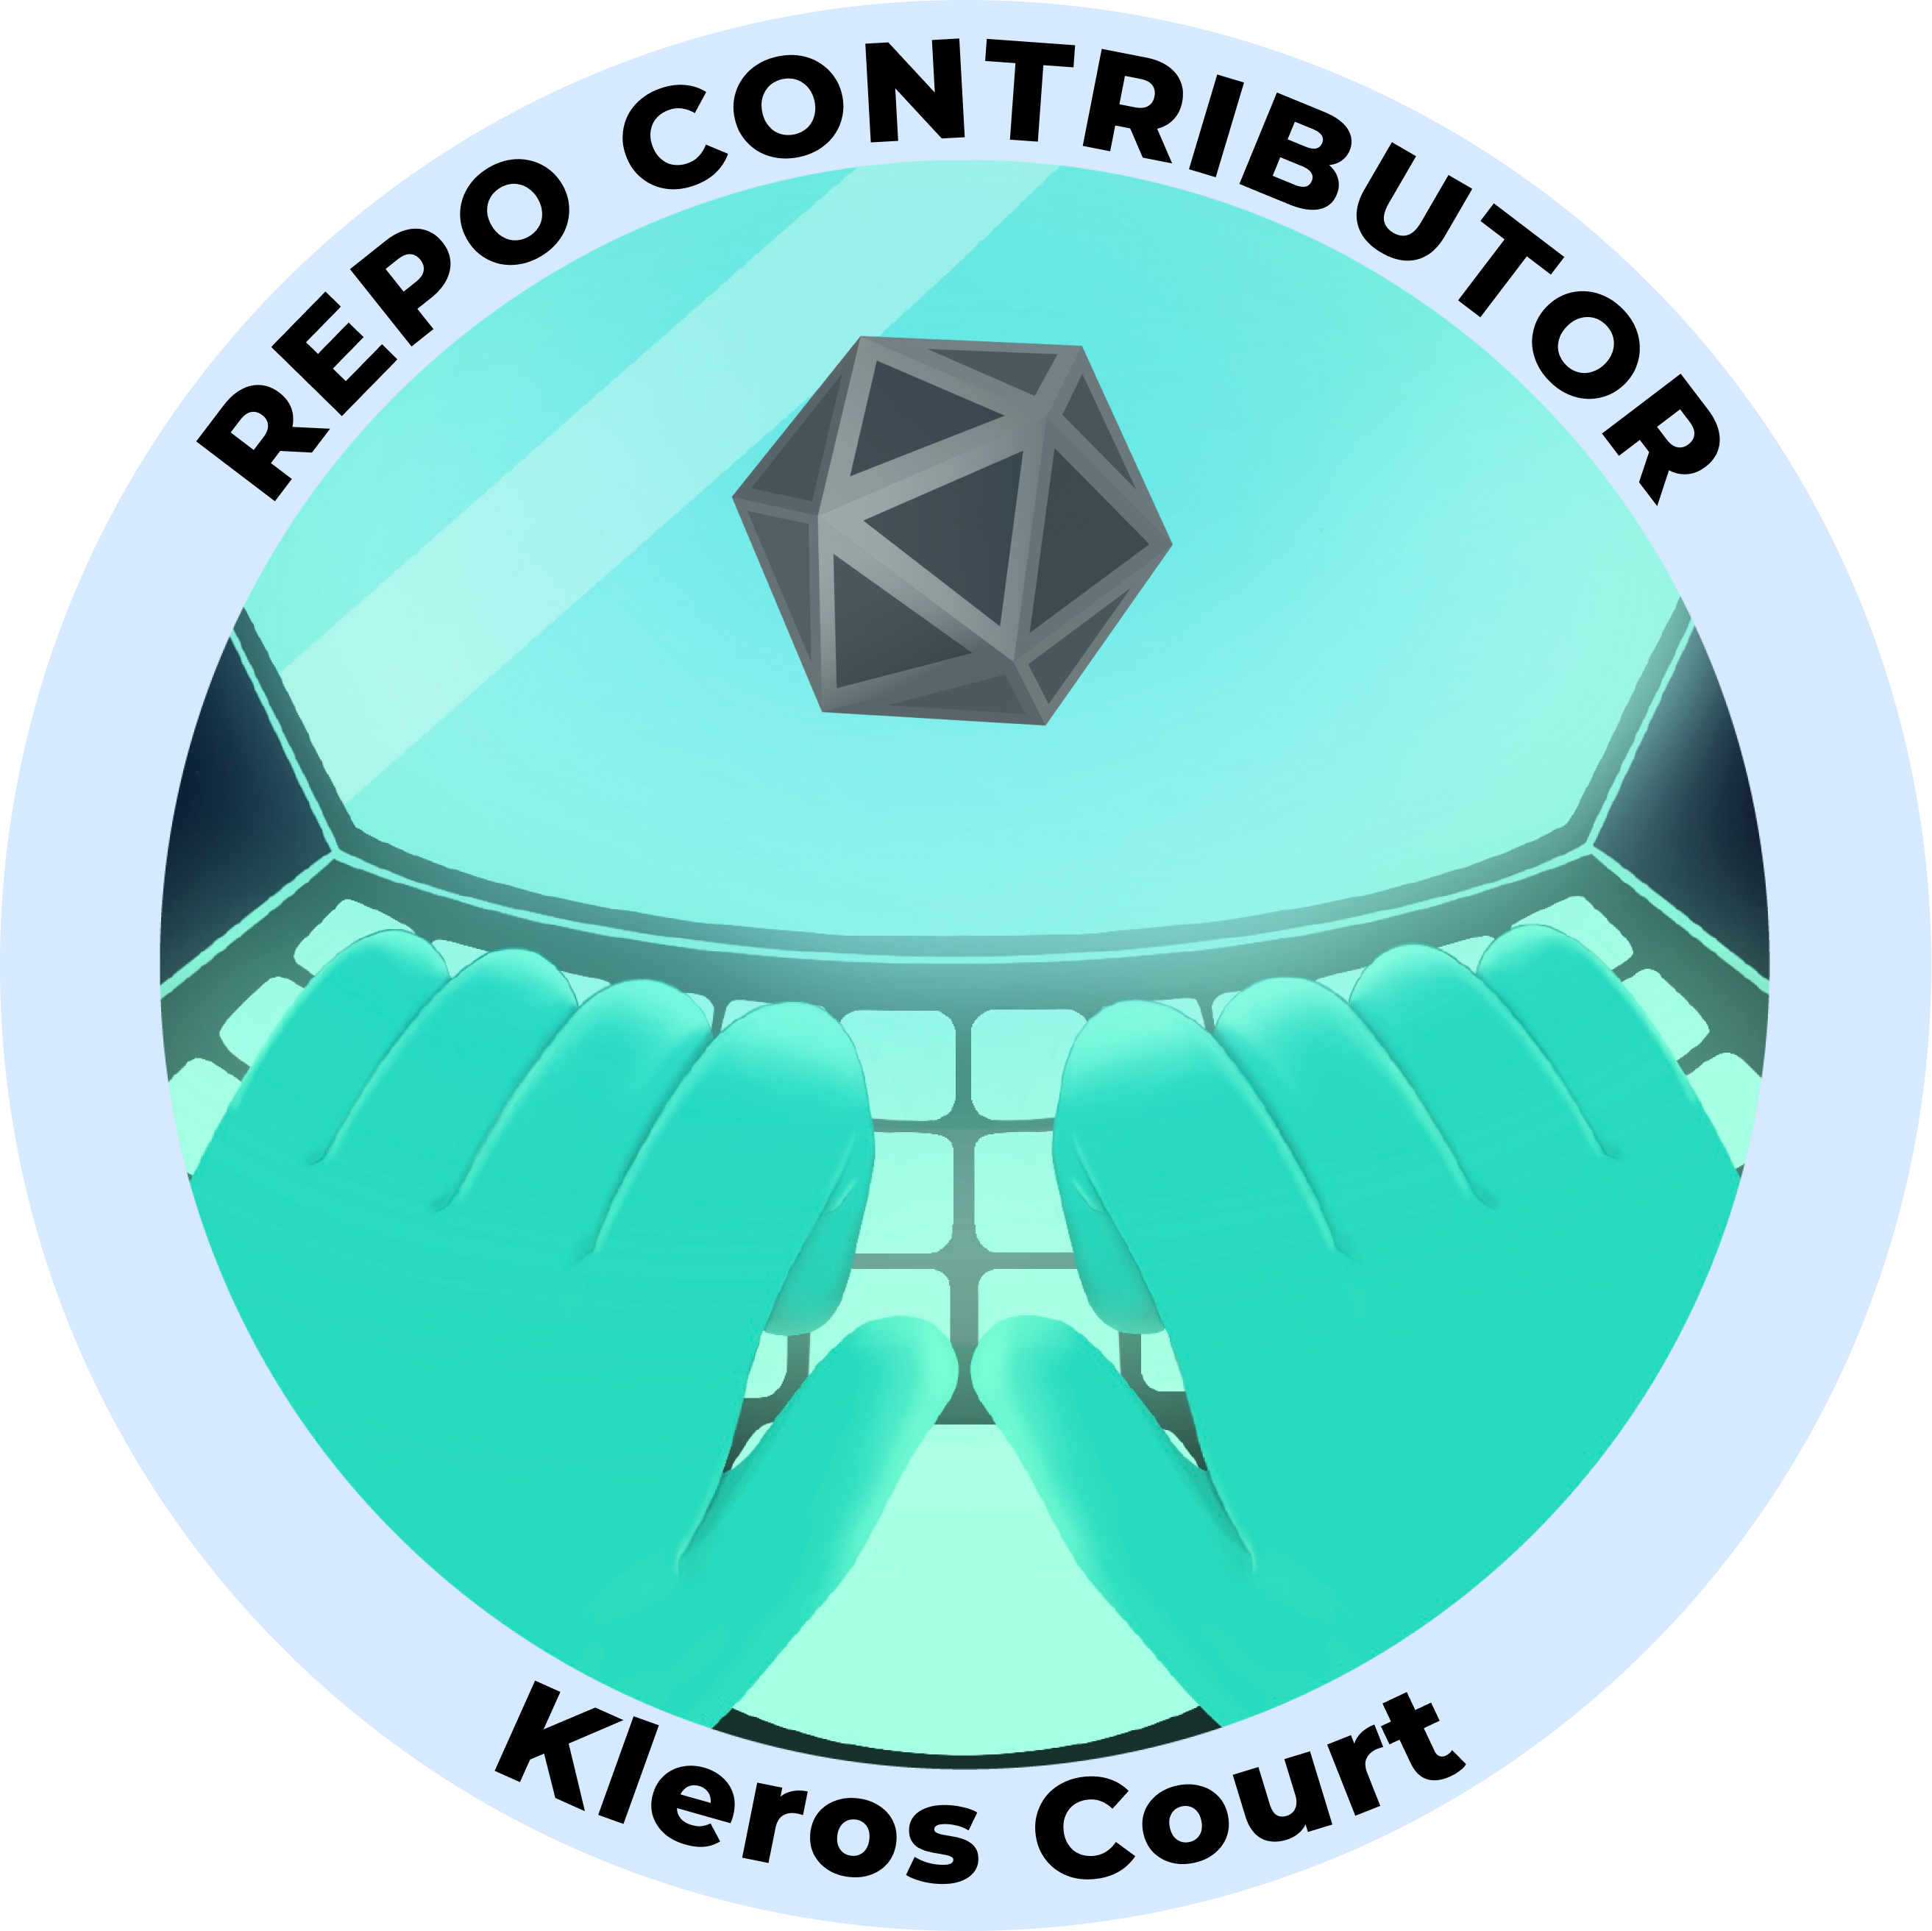 Web3 Badge | Project Contributor: Kleros Court logo